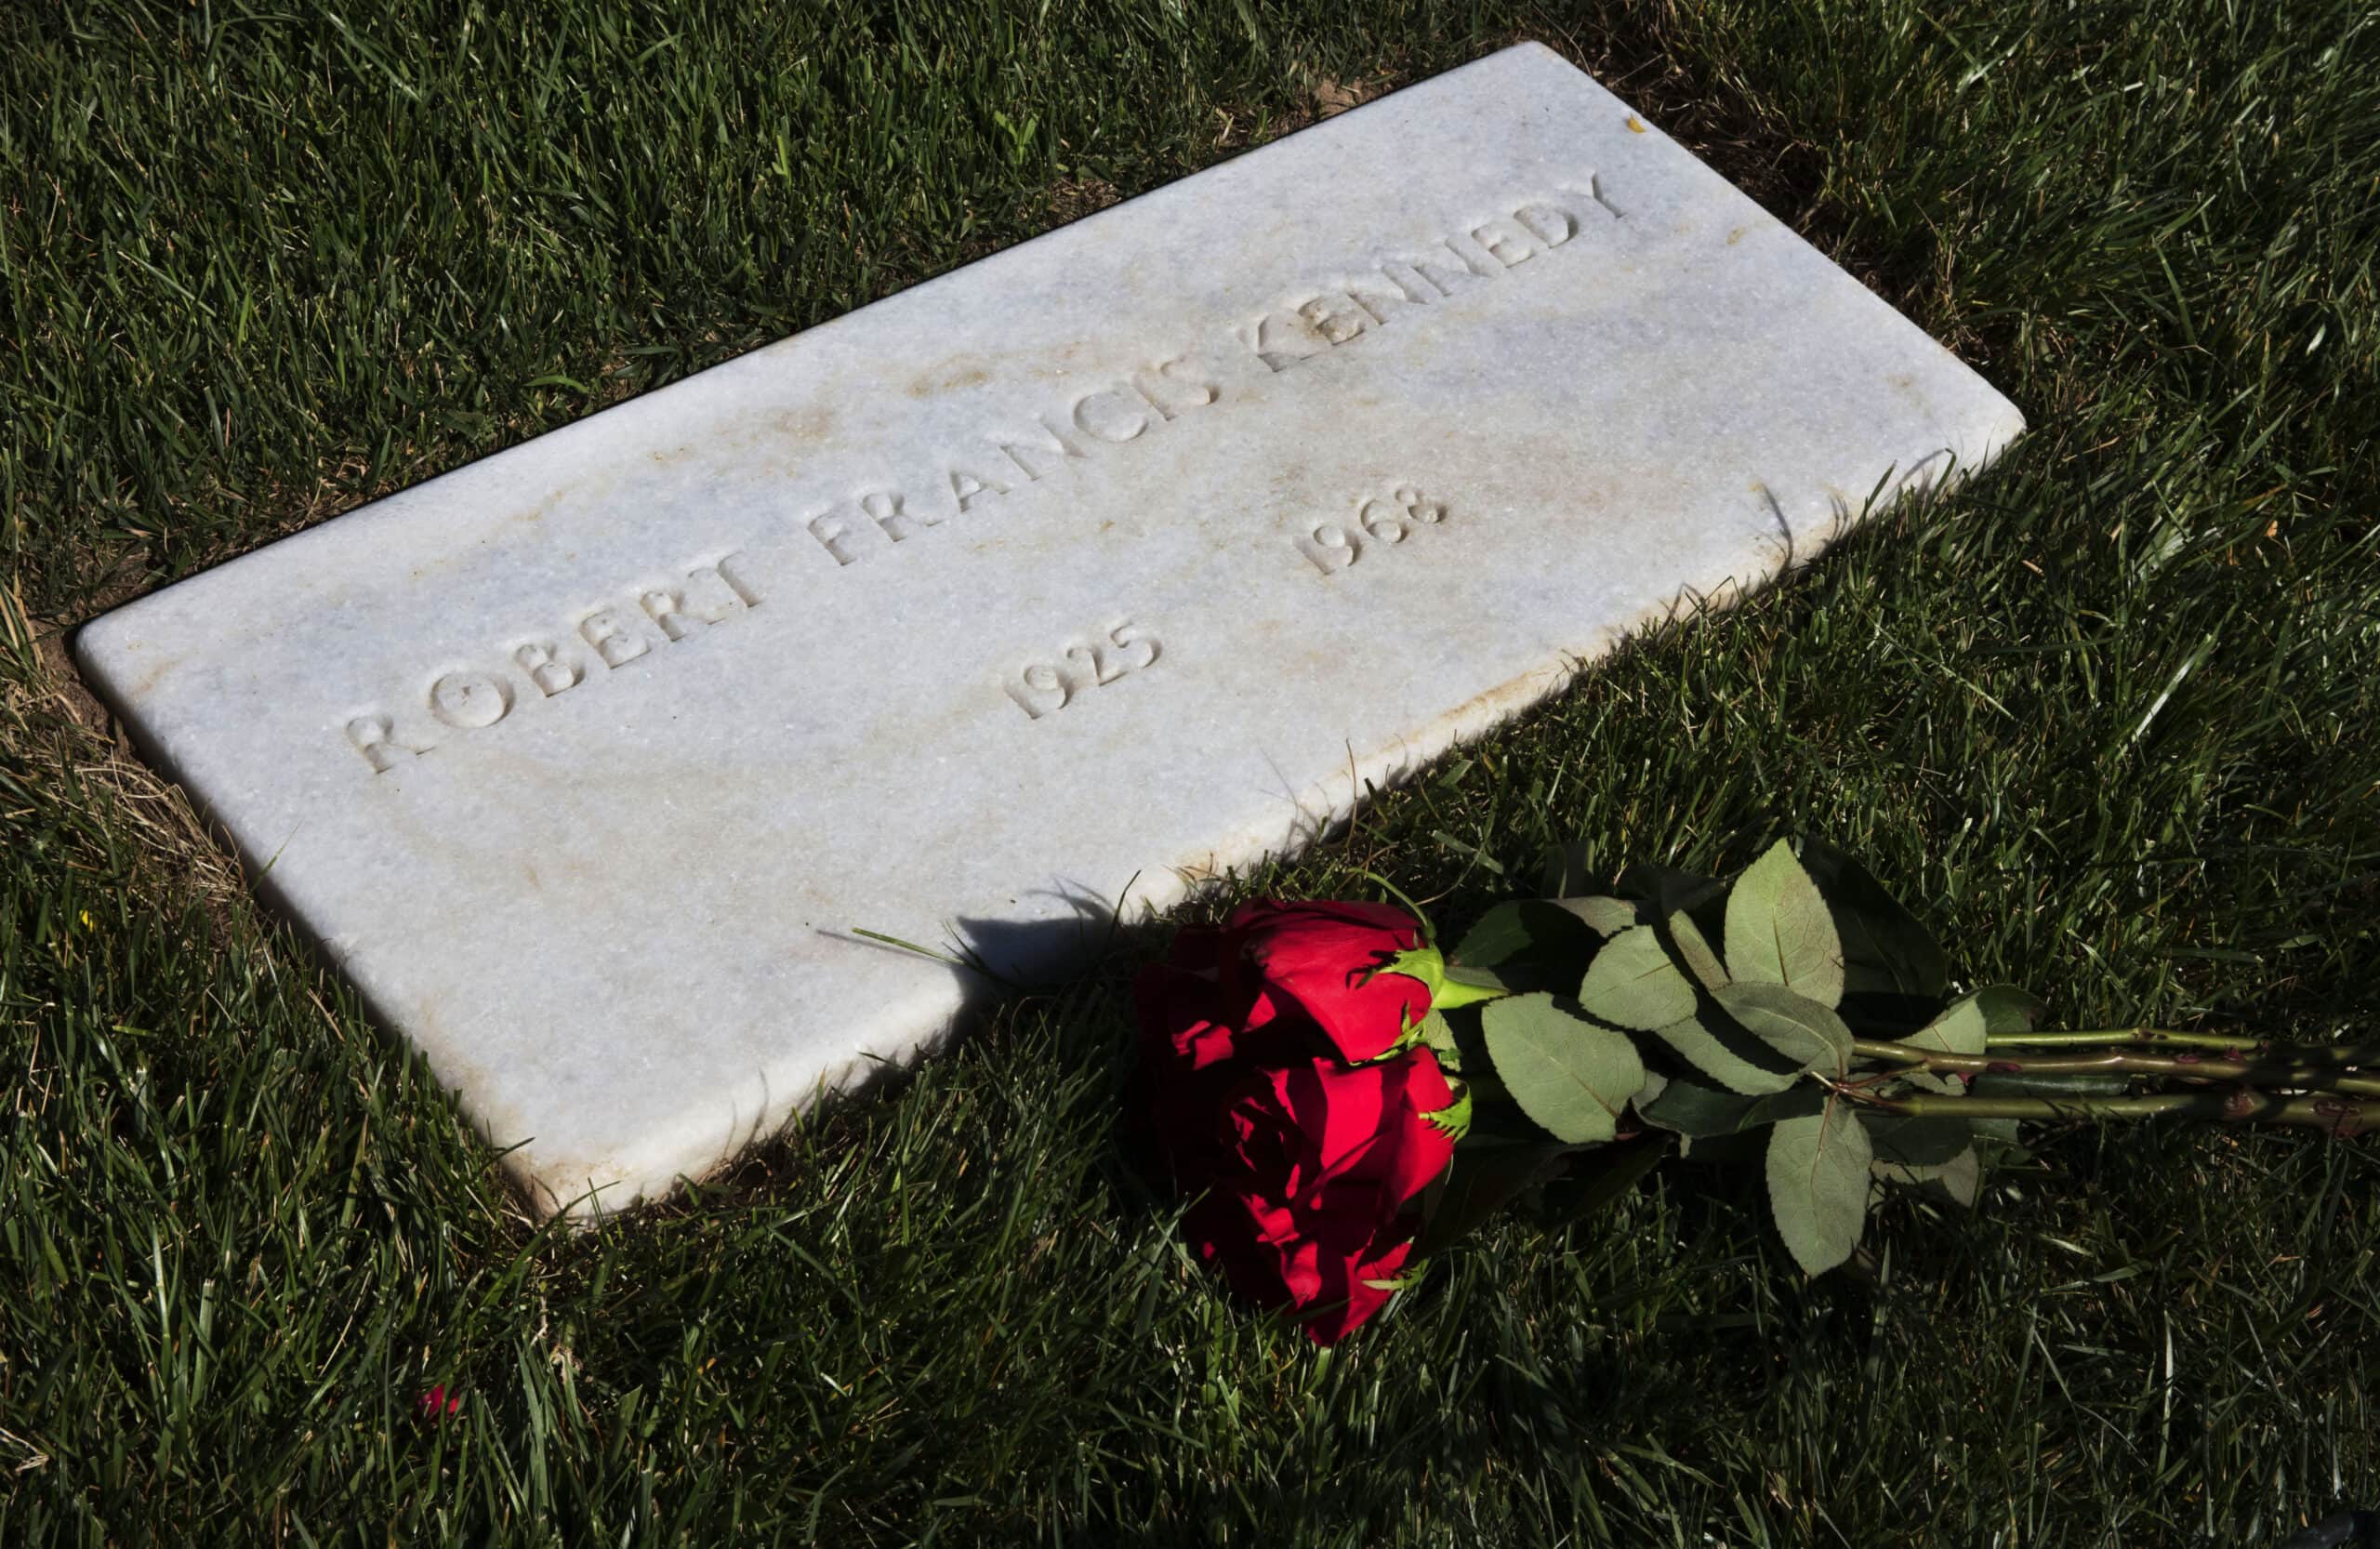 Robert Kennedy’s grave at Arlington National Cemetery